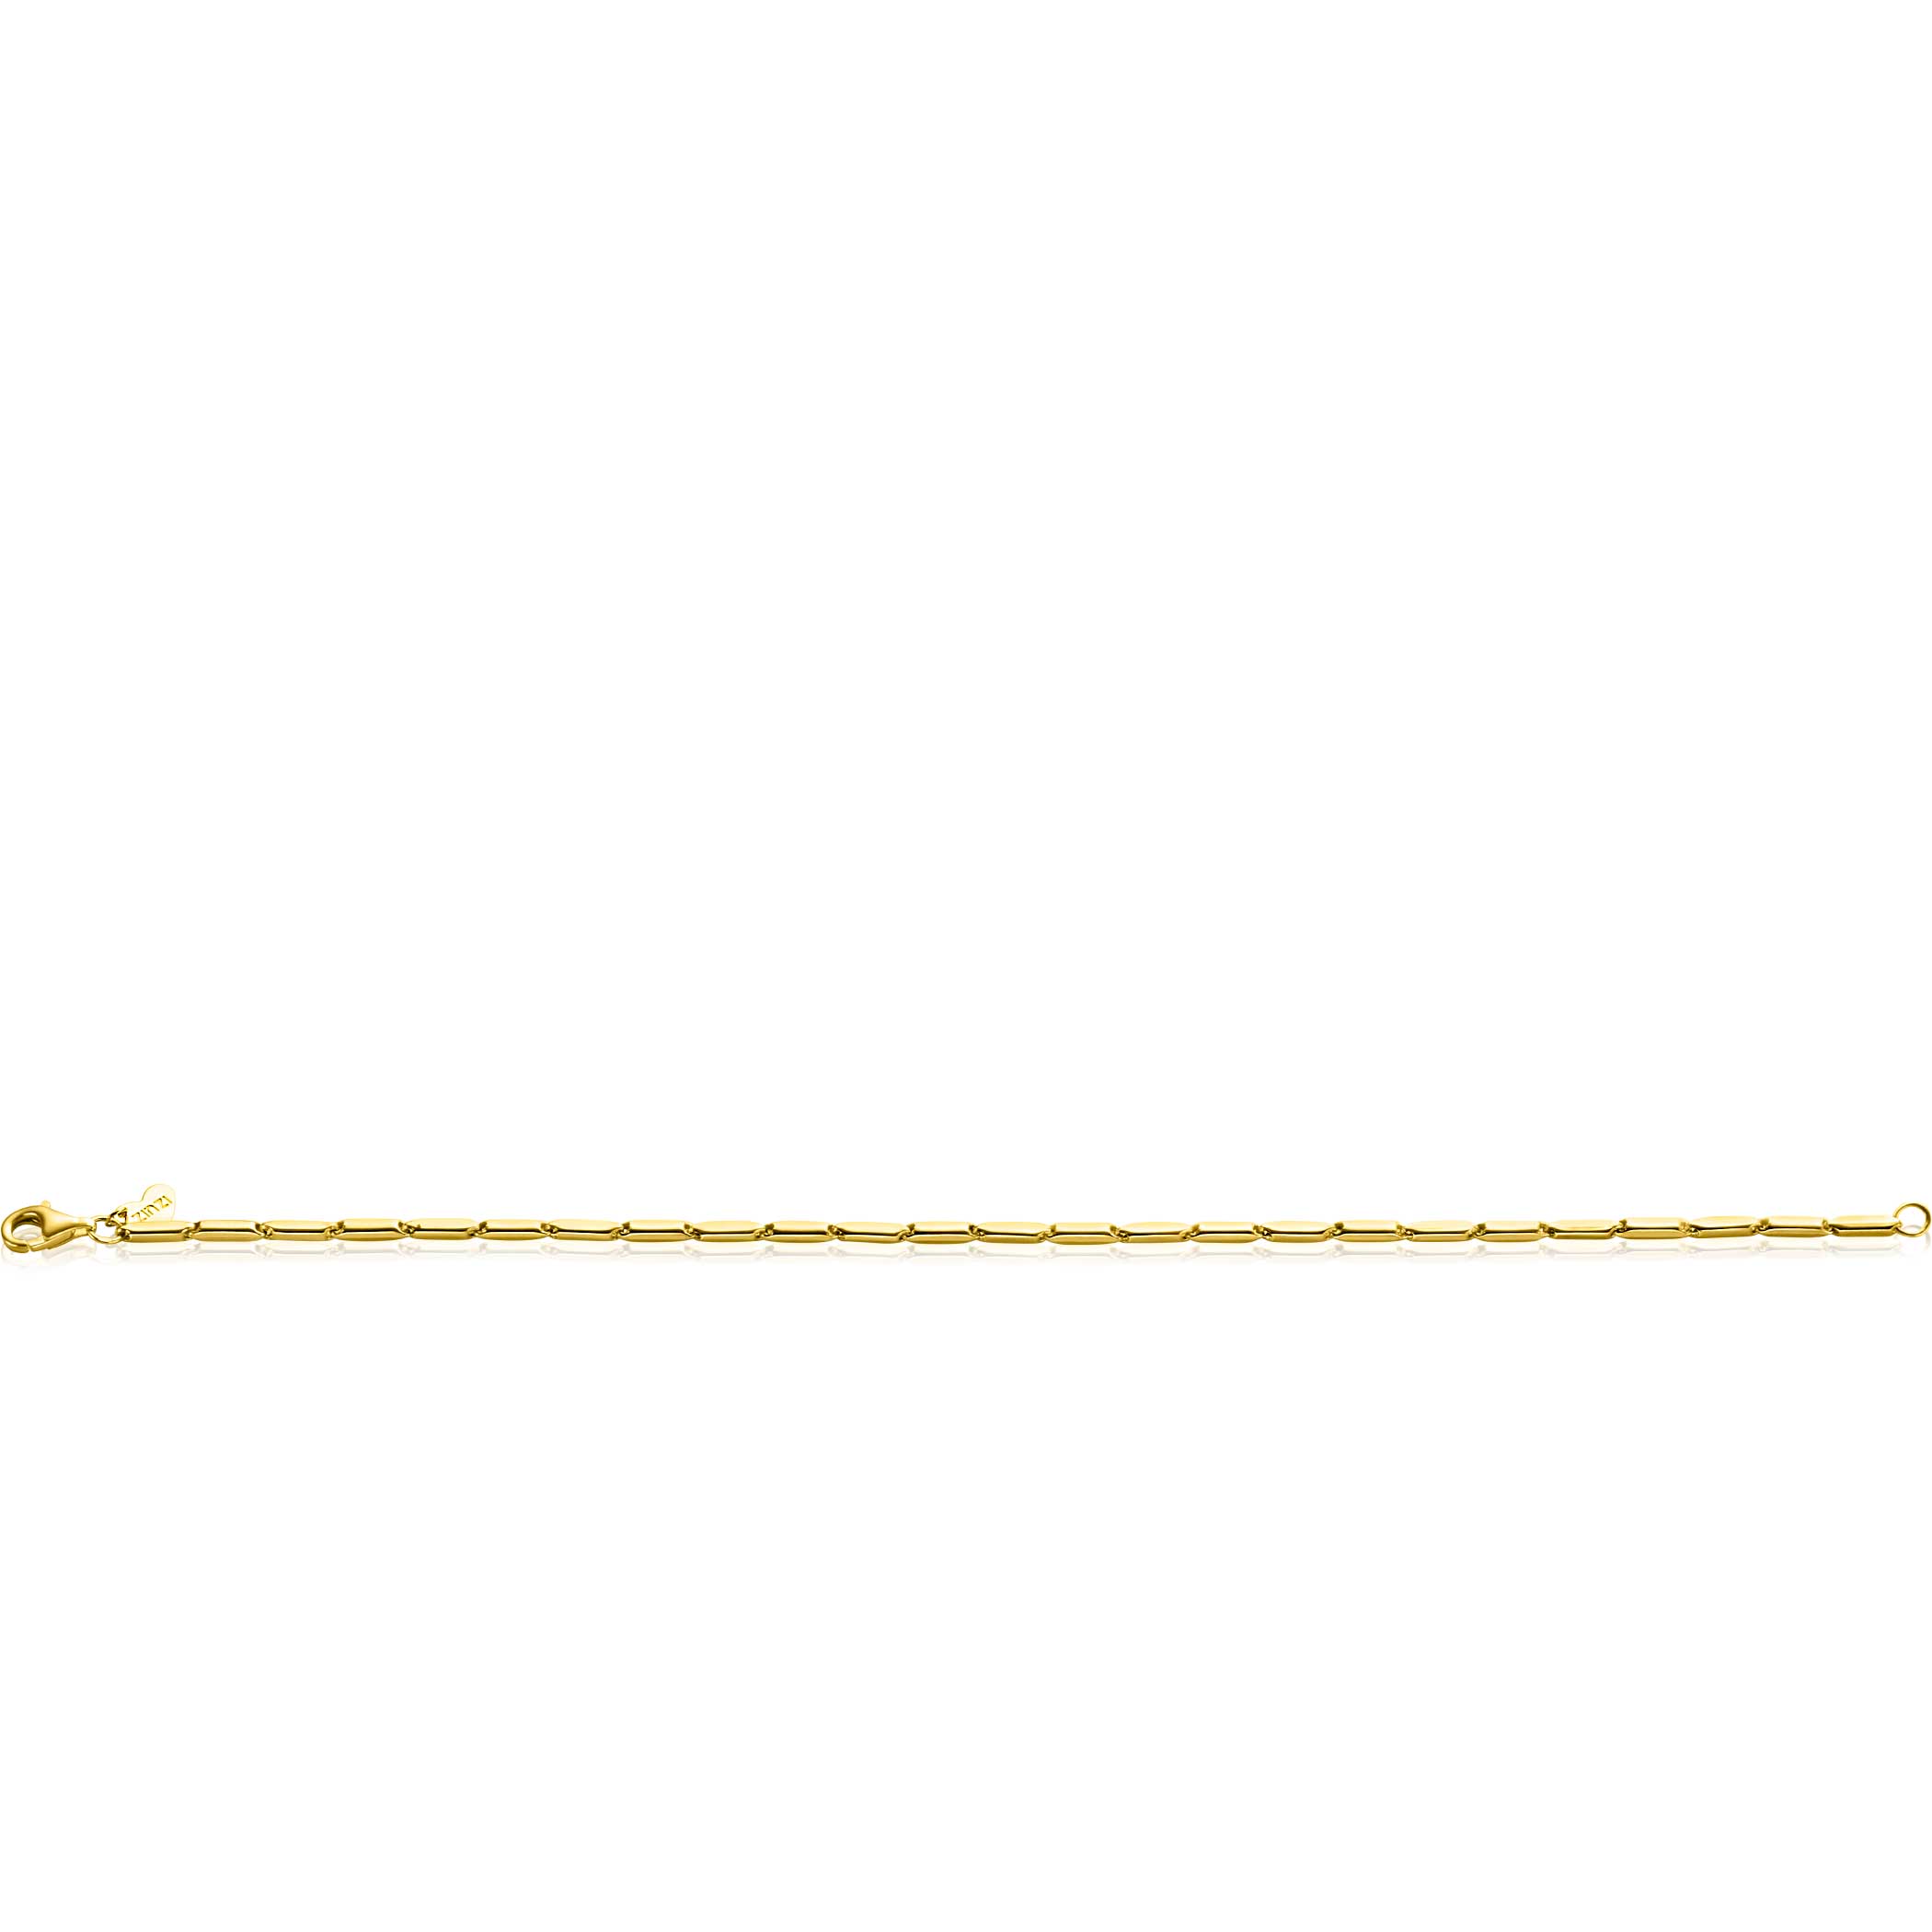 ZINZI 14K Gold Bracelet Rectangular Bars Square Tubes 2mm width 18cm ZGA452